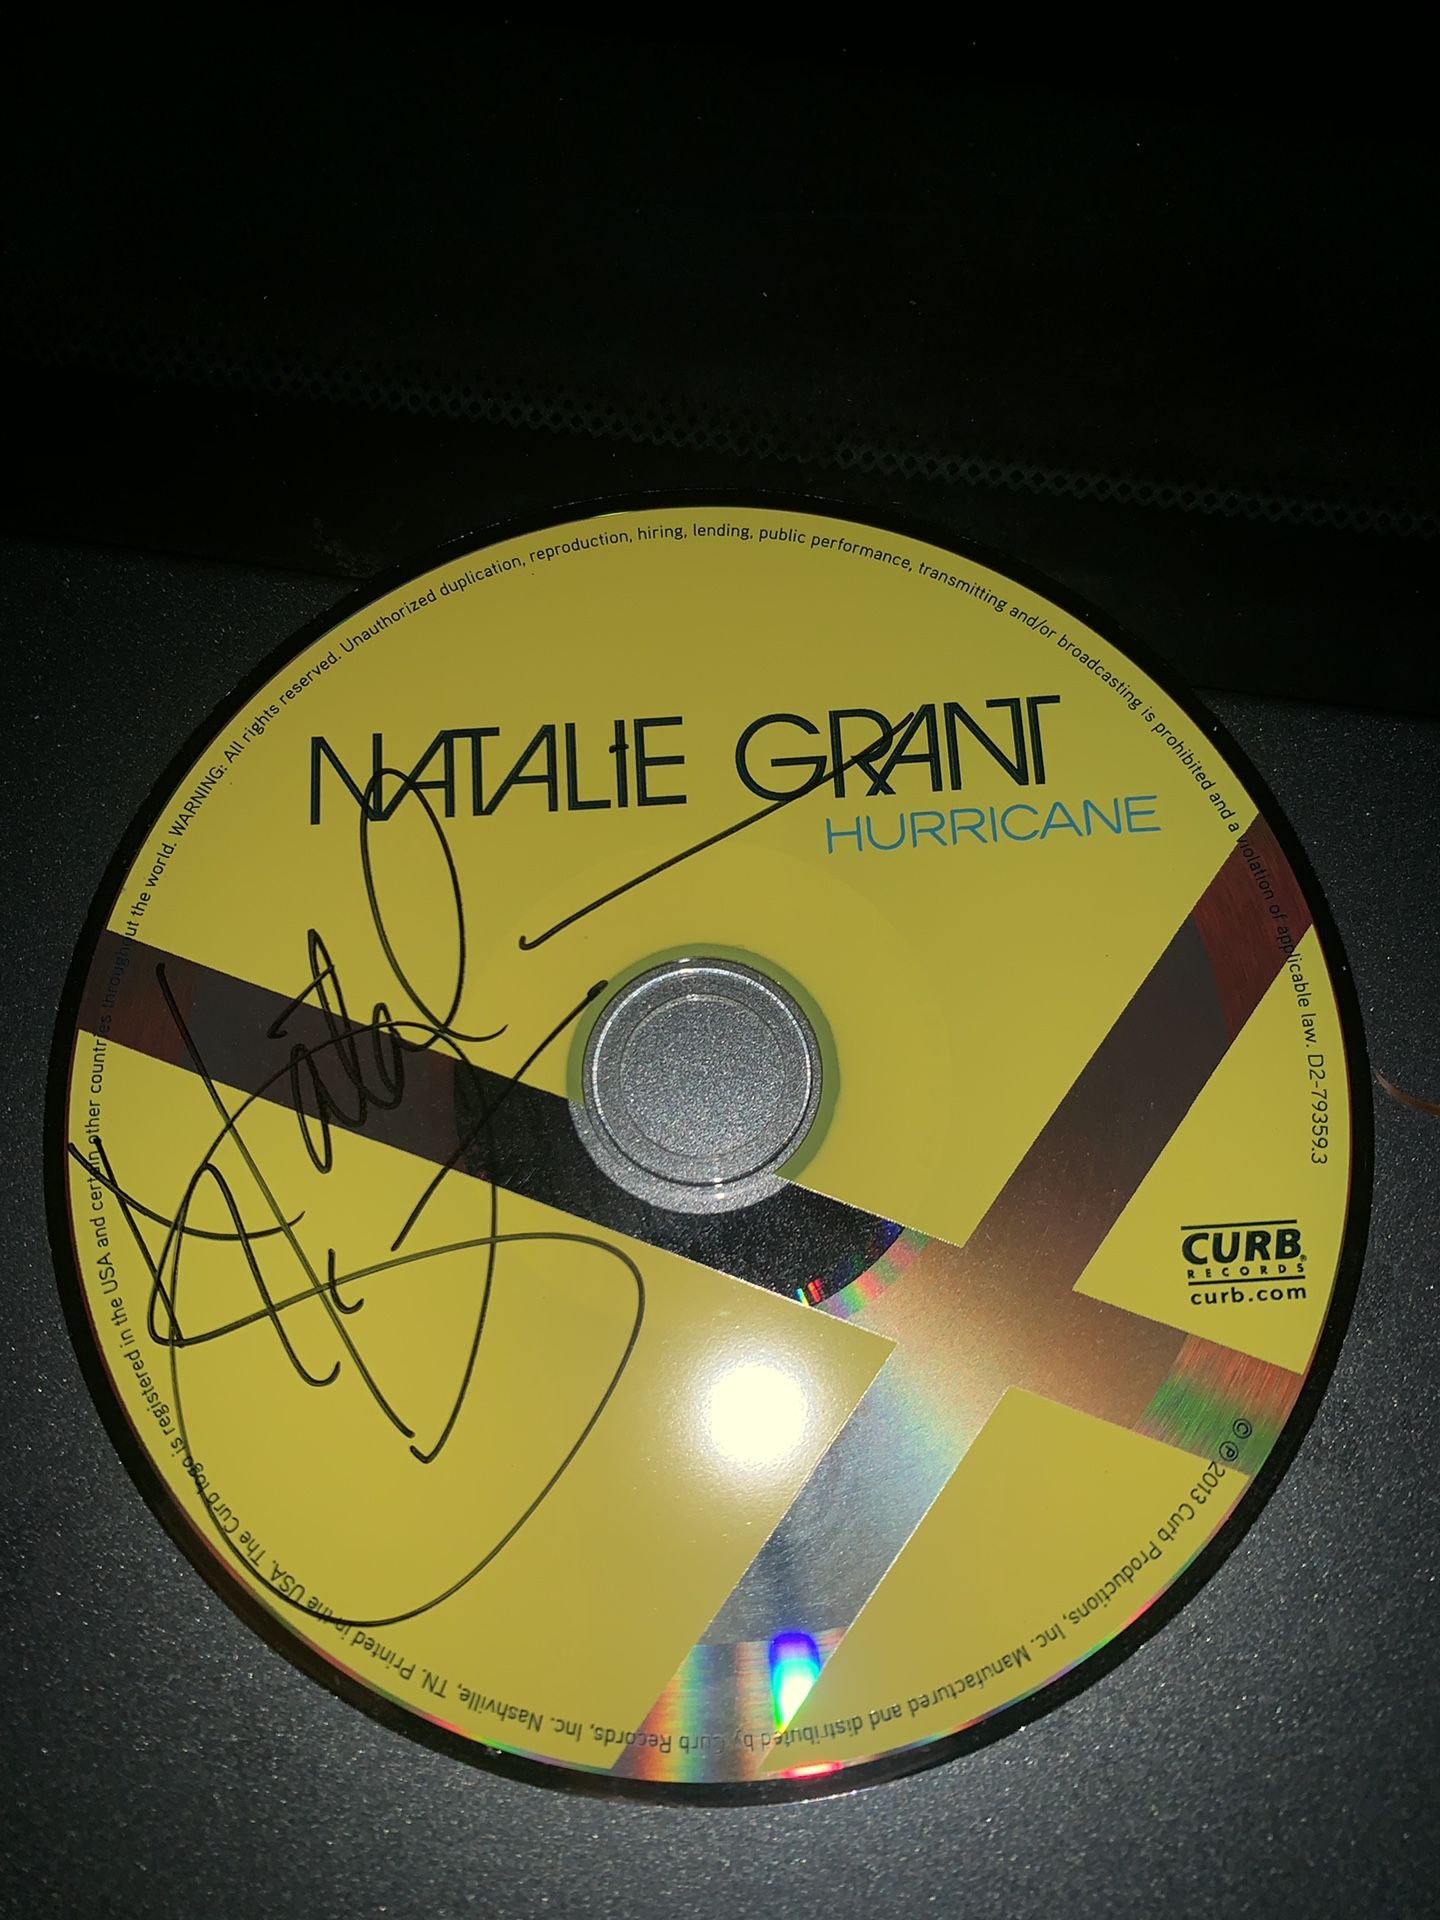 Natalie grant cd